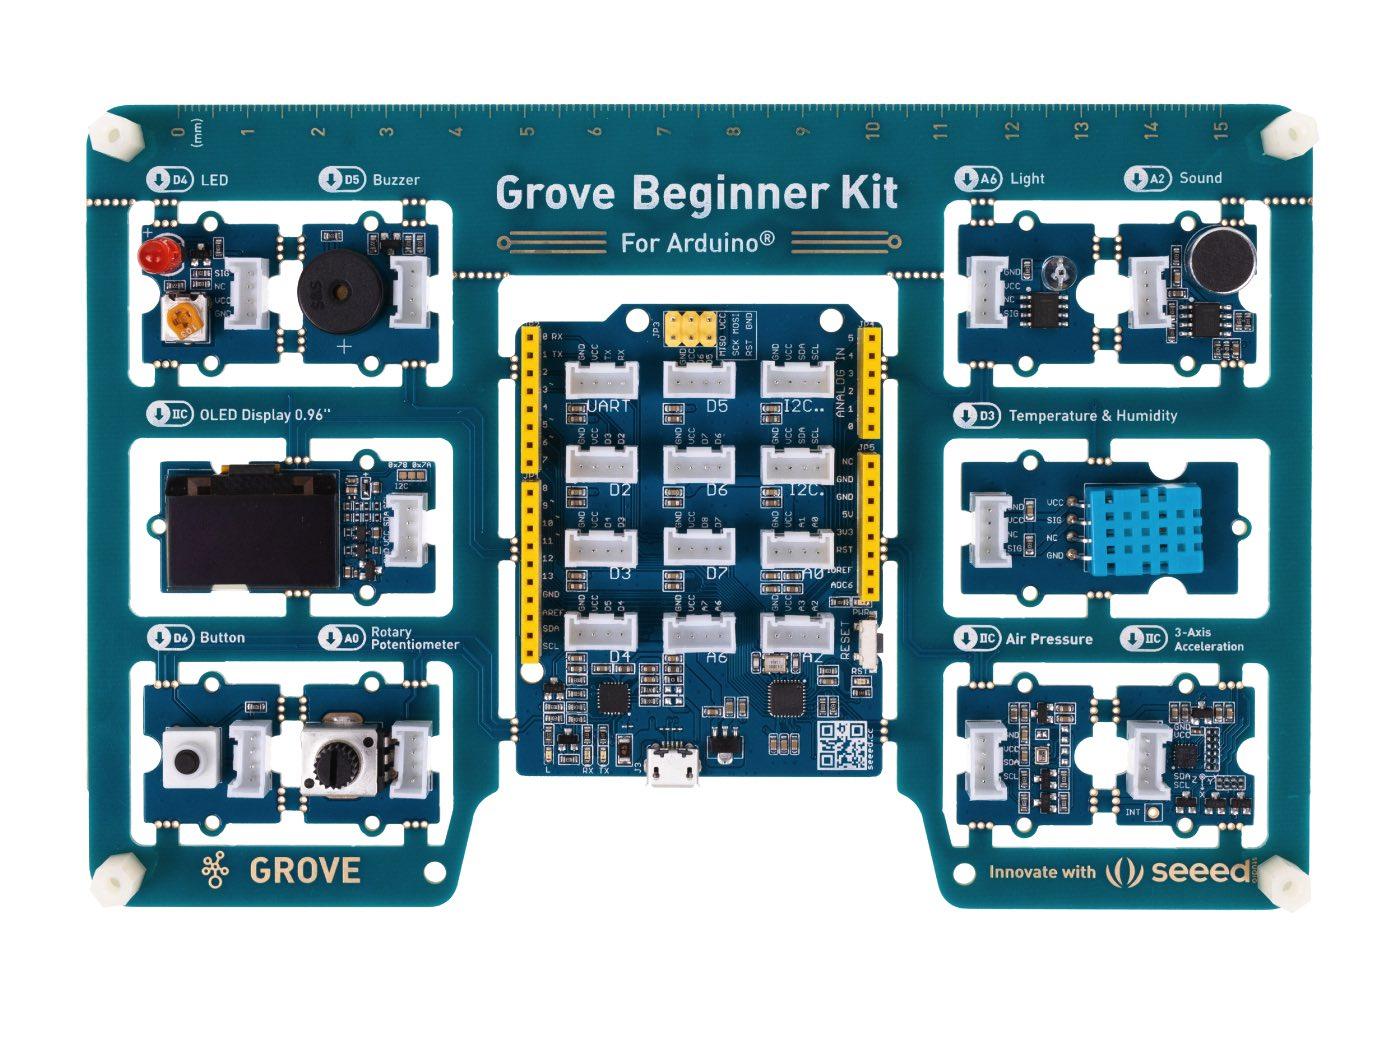 10 Sensoren 12 Projekte All-in-one-Board Einsteiger-Kit Arduino seeed Grove 